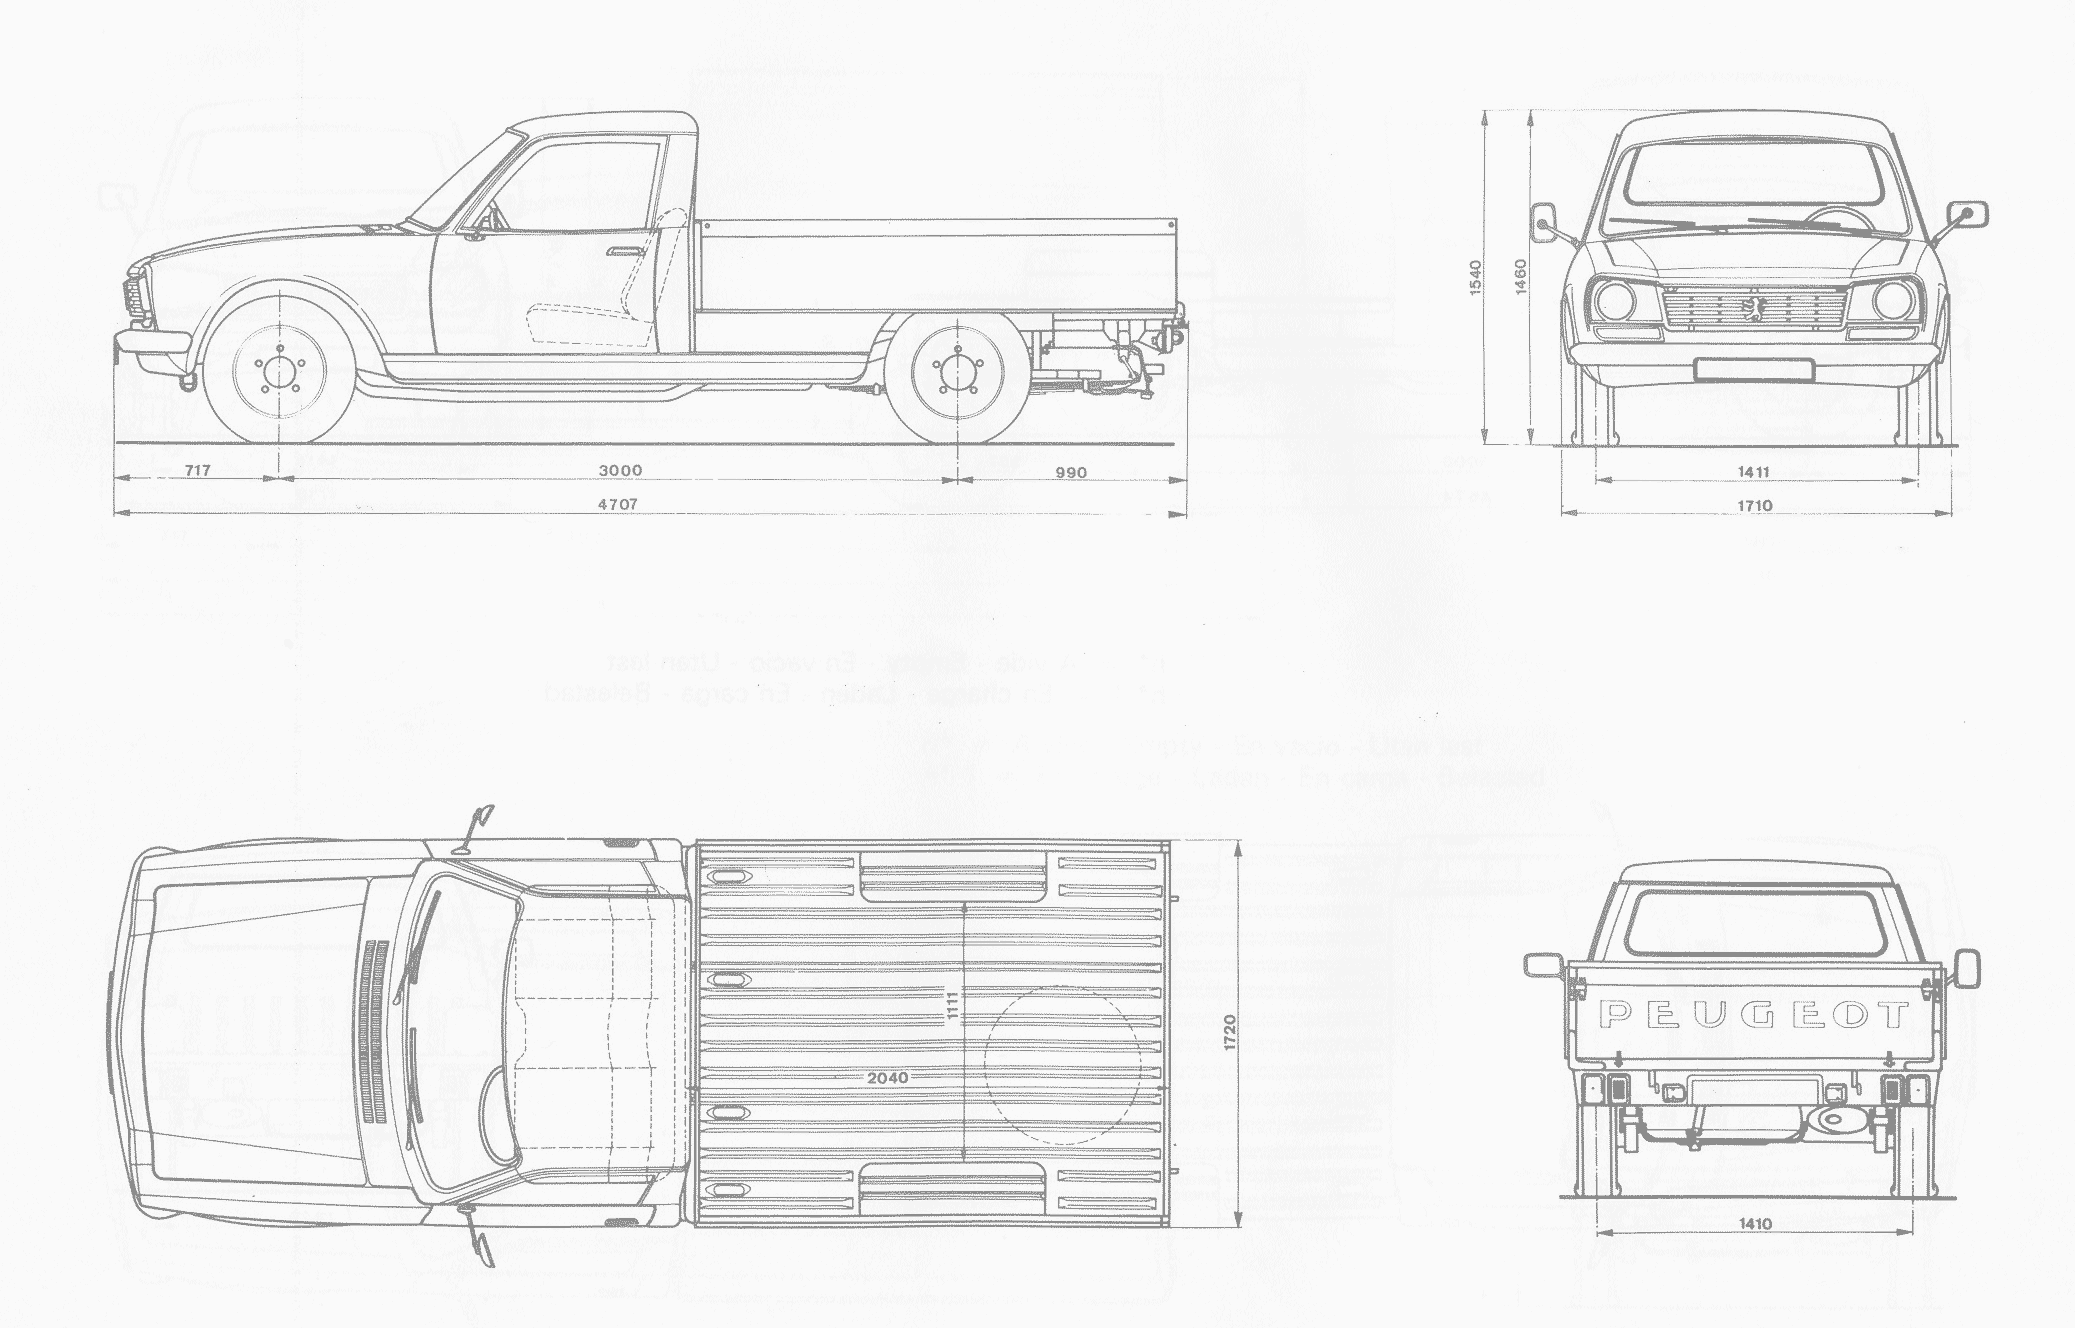 Peugeot 504 truck blueprint